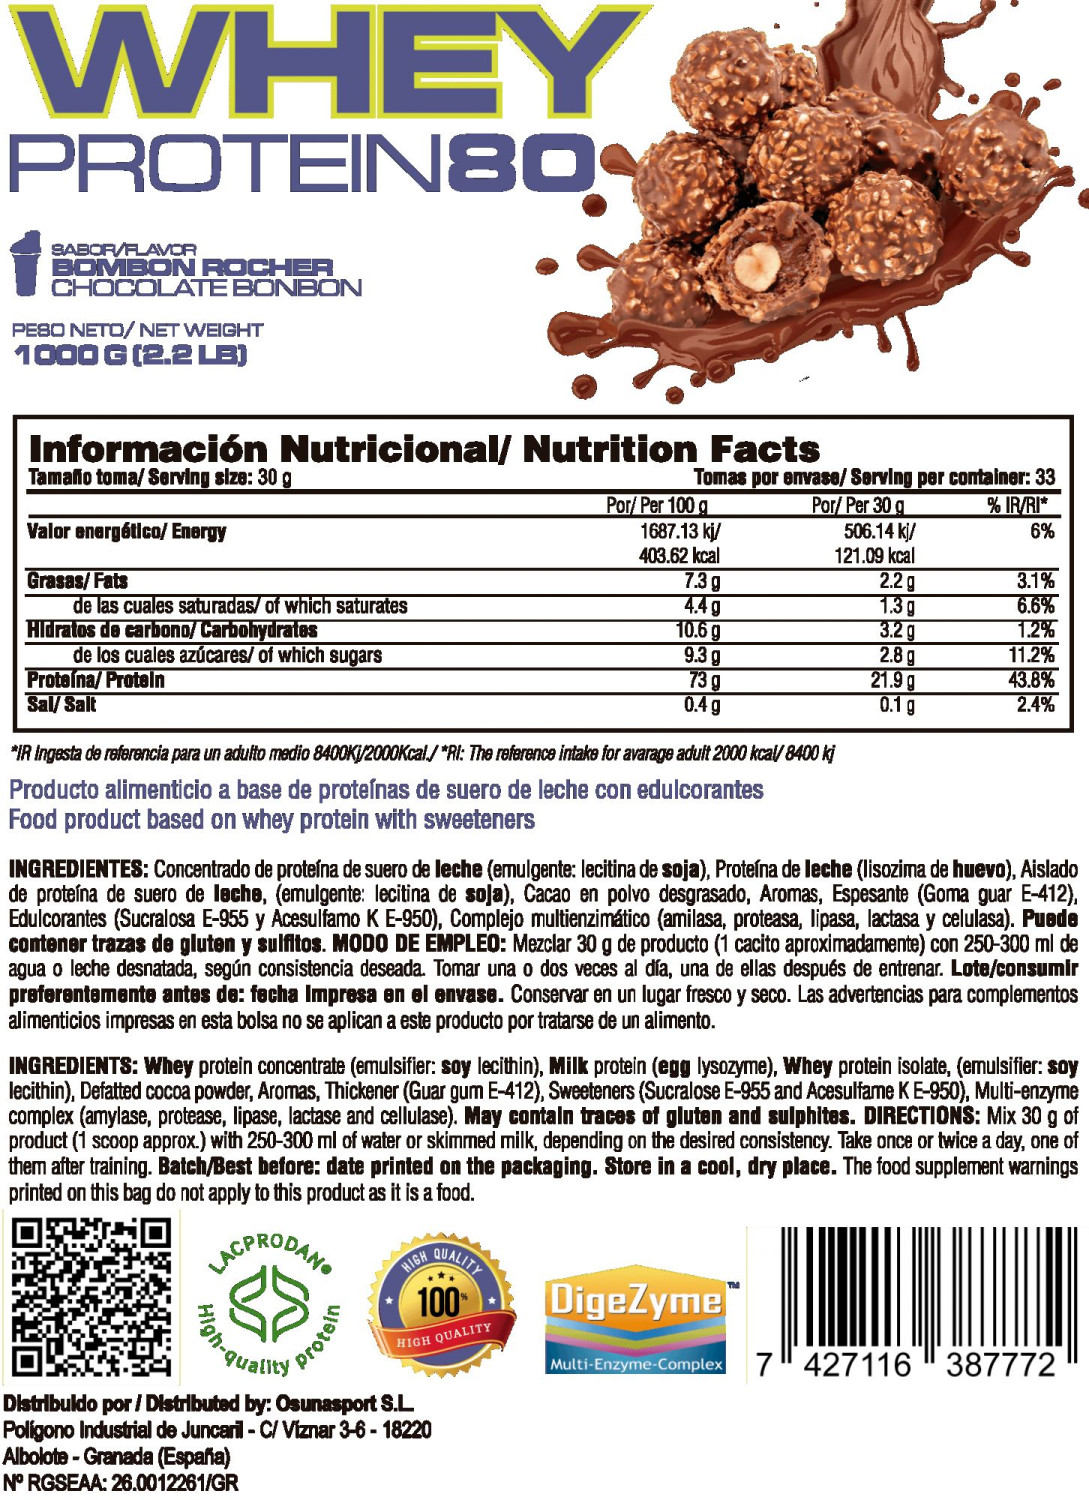 Whey Protein80 - 1kg De Mm Supplements Sabor Bombón Rocher